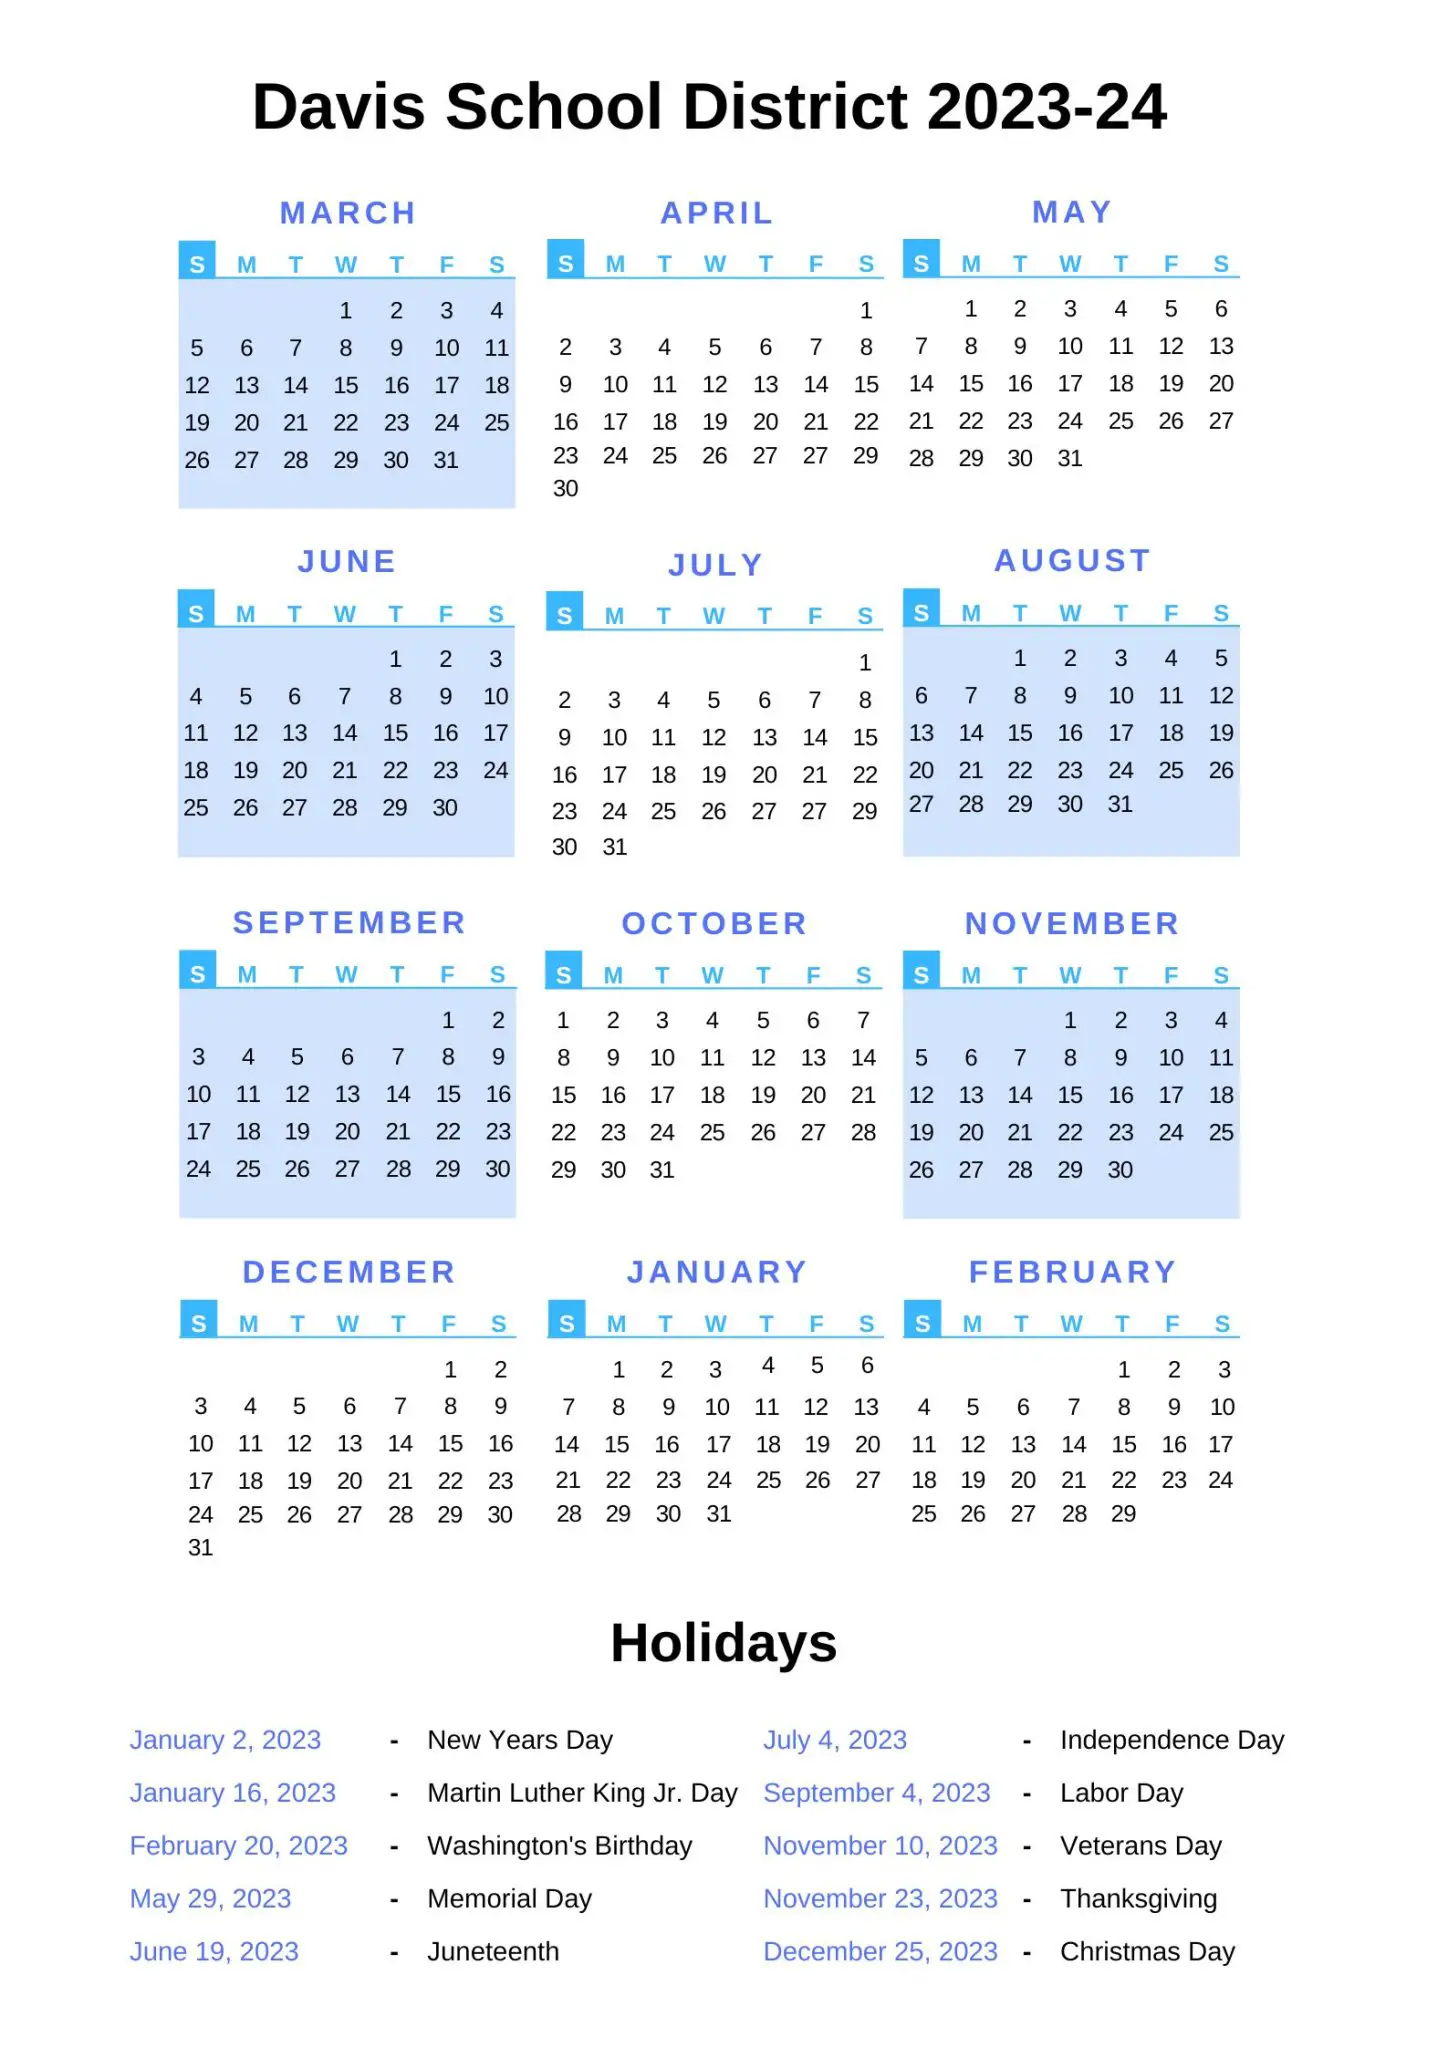 davis-school-district-calendar-with-holidays-2022-2023